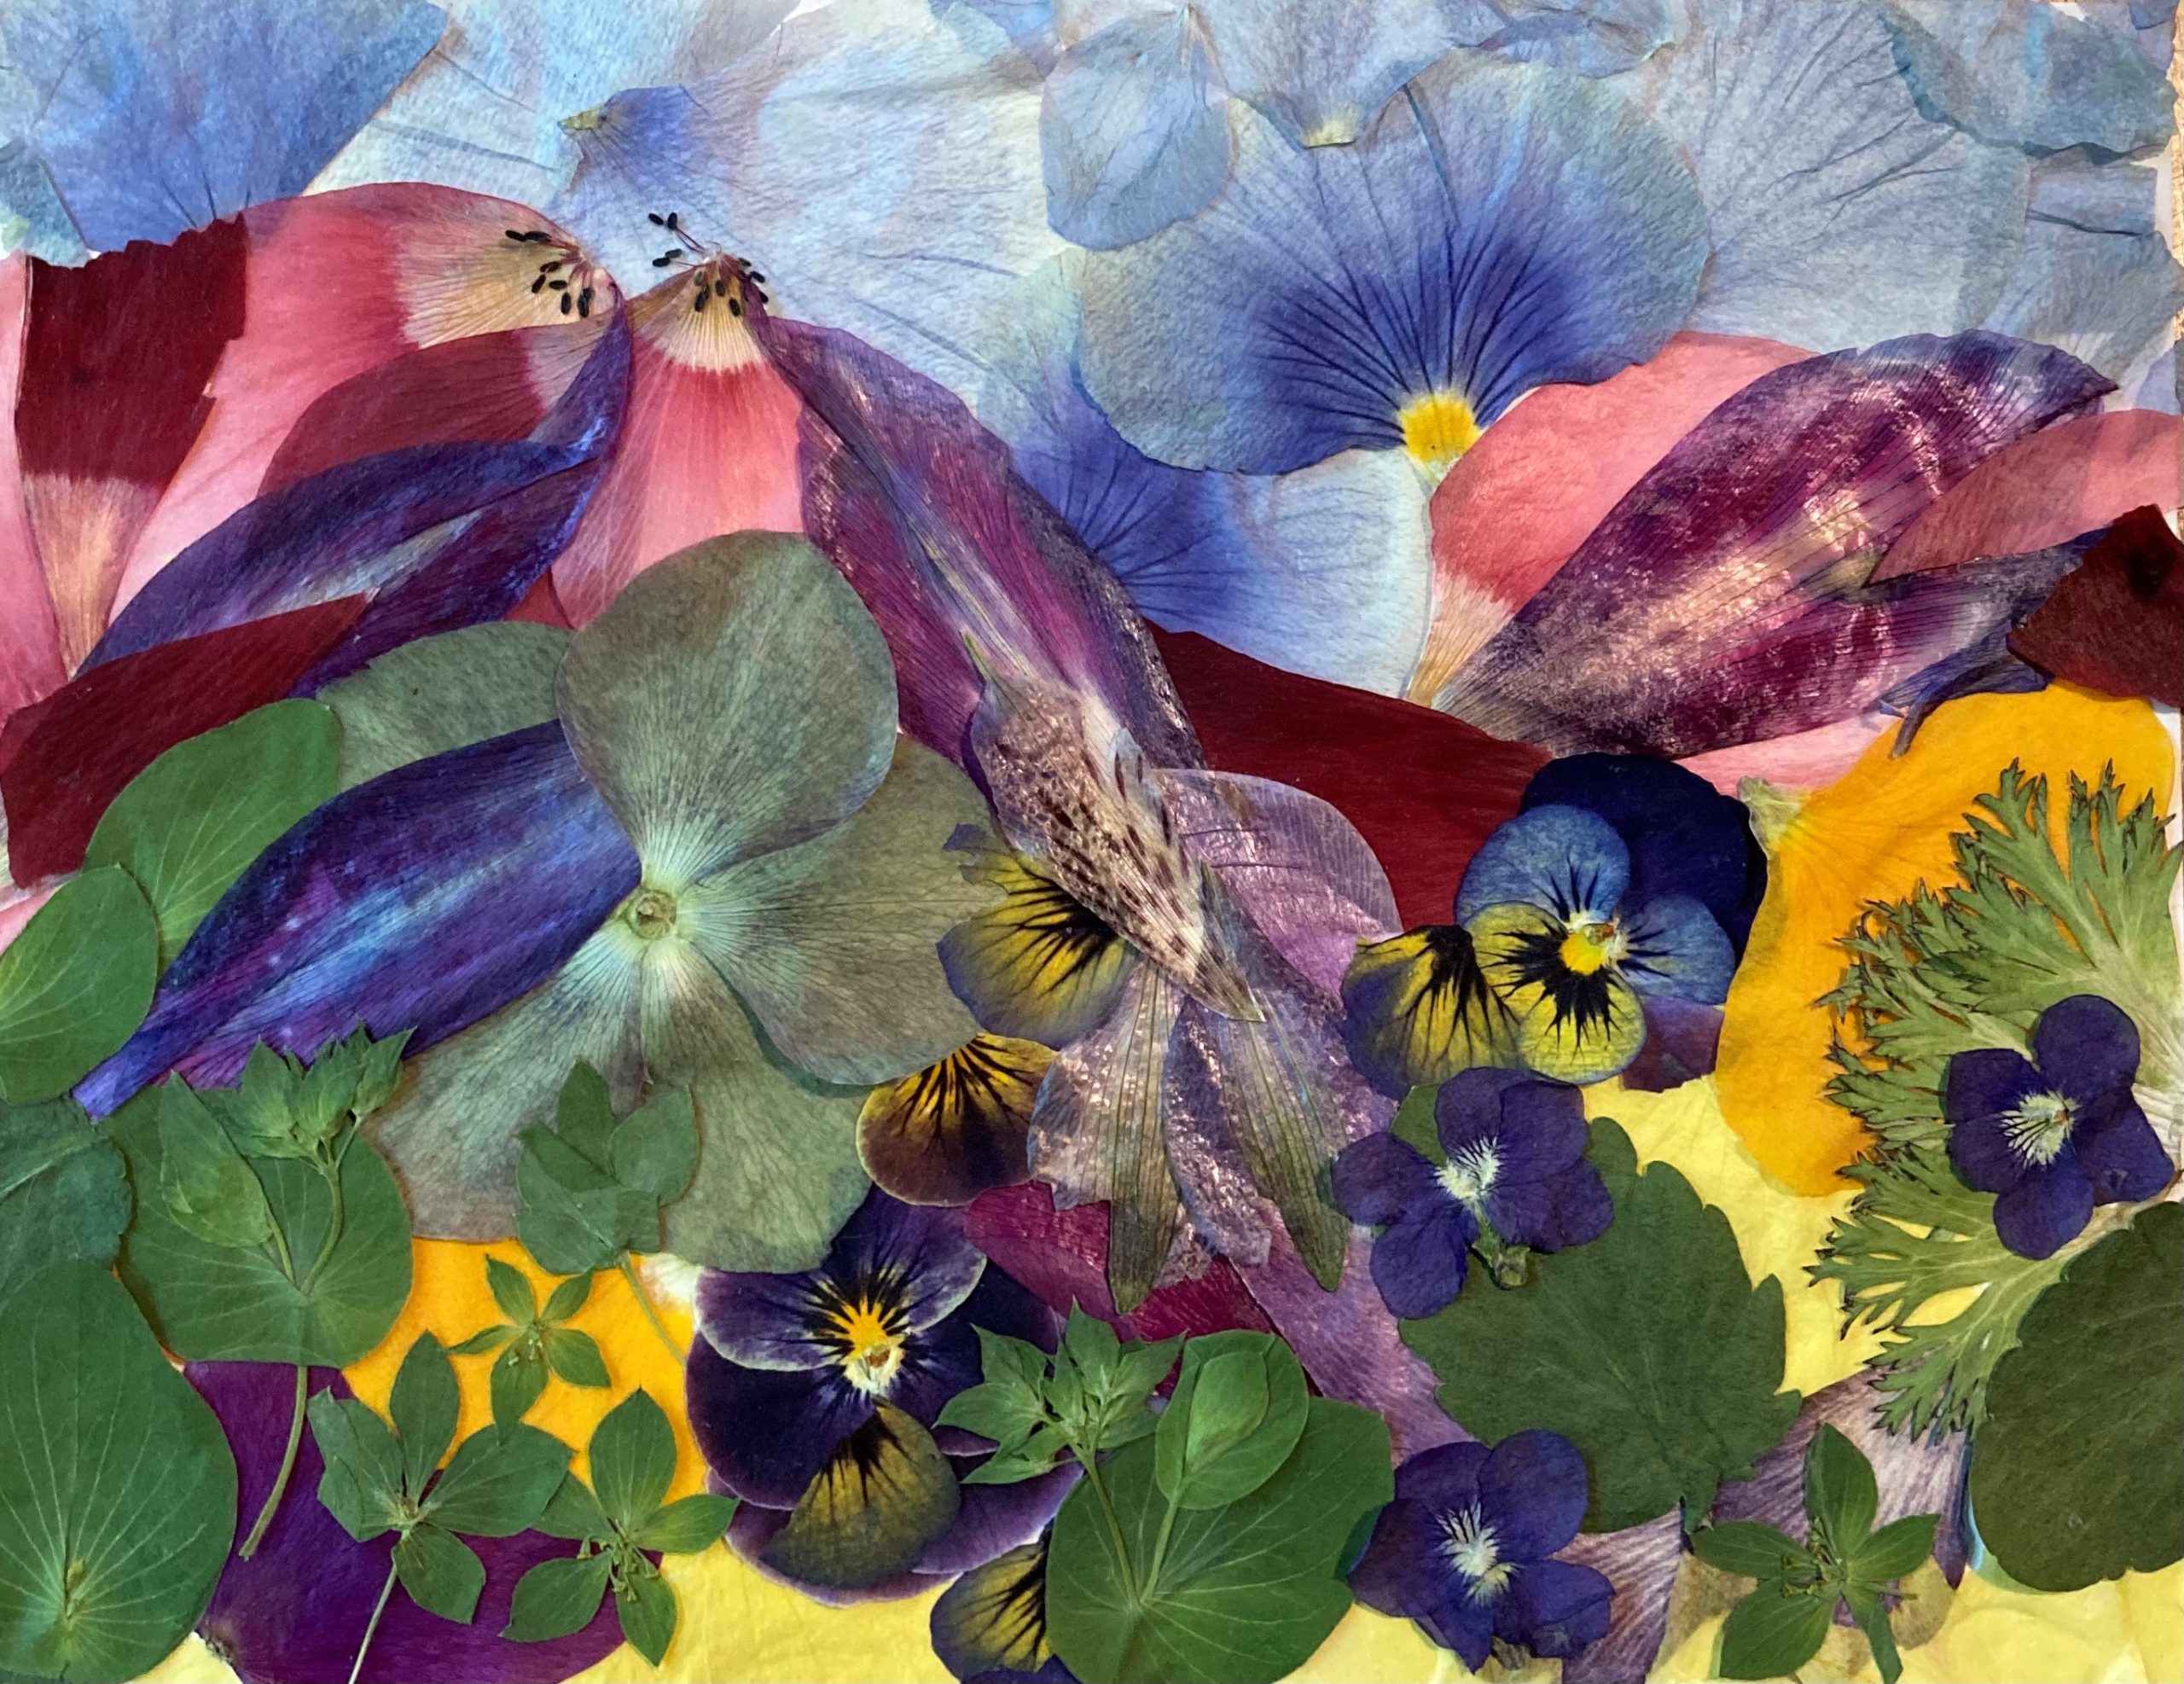 https://www.ashevilleart.org/wp-content/uploads/Susan-McChesney-Flower-13.21-2021.-Oshibana-on-paper.-c-Susan-McChesney-image-courtesy-the-Artist.-scaled.jpg